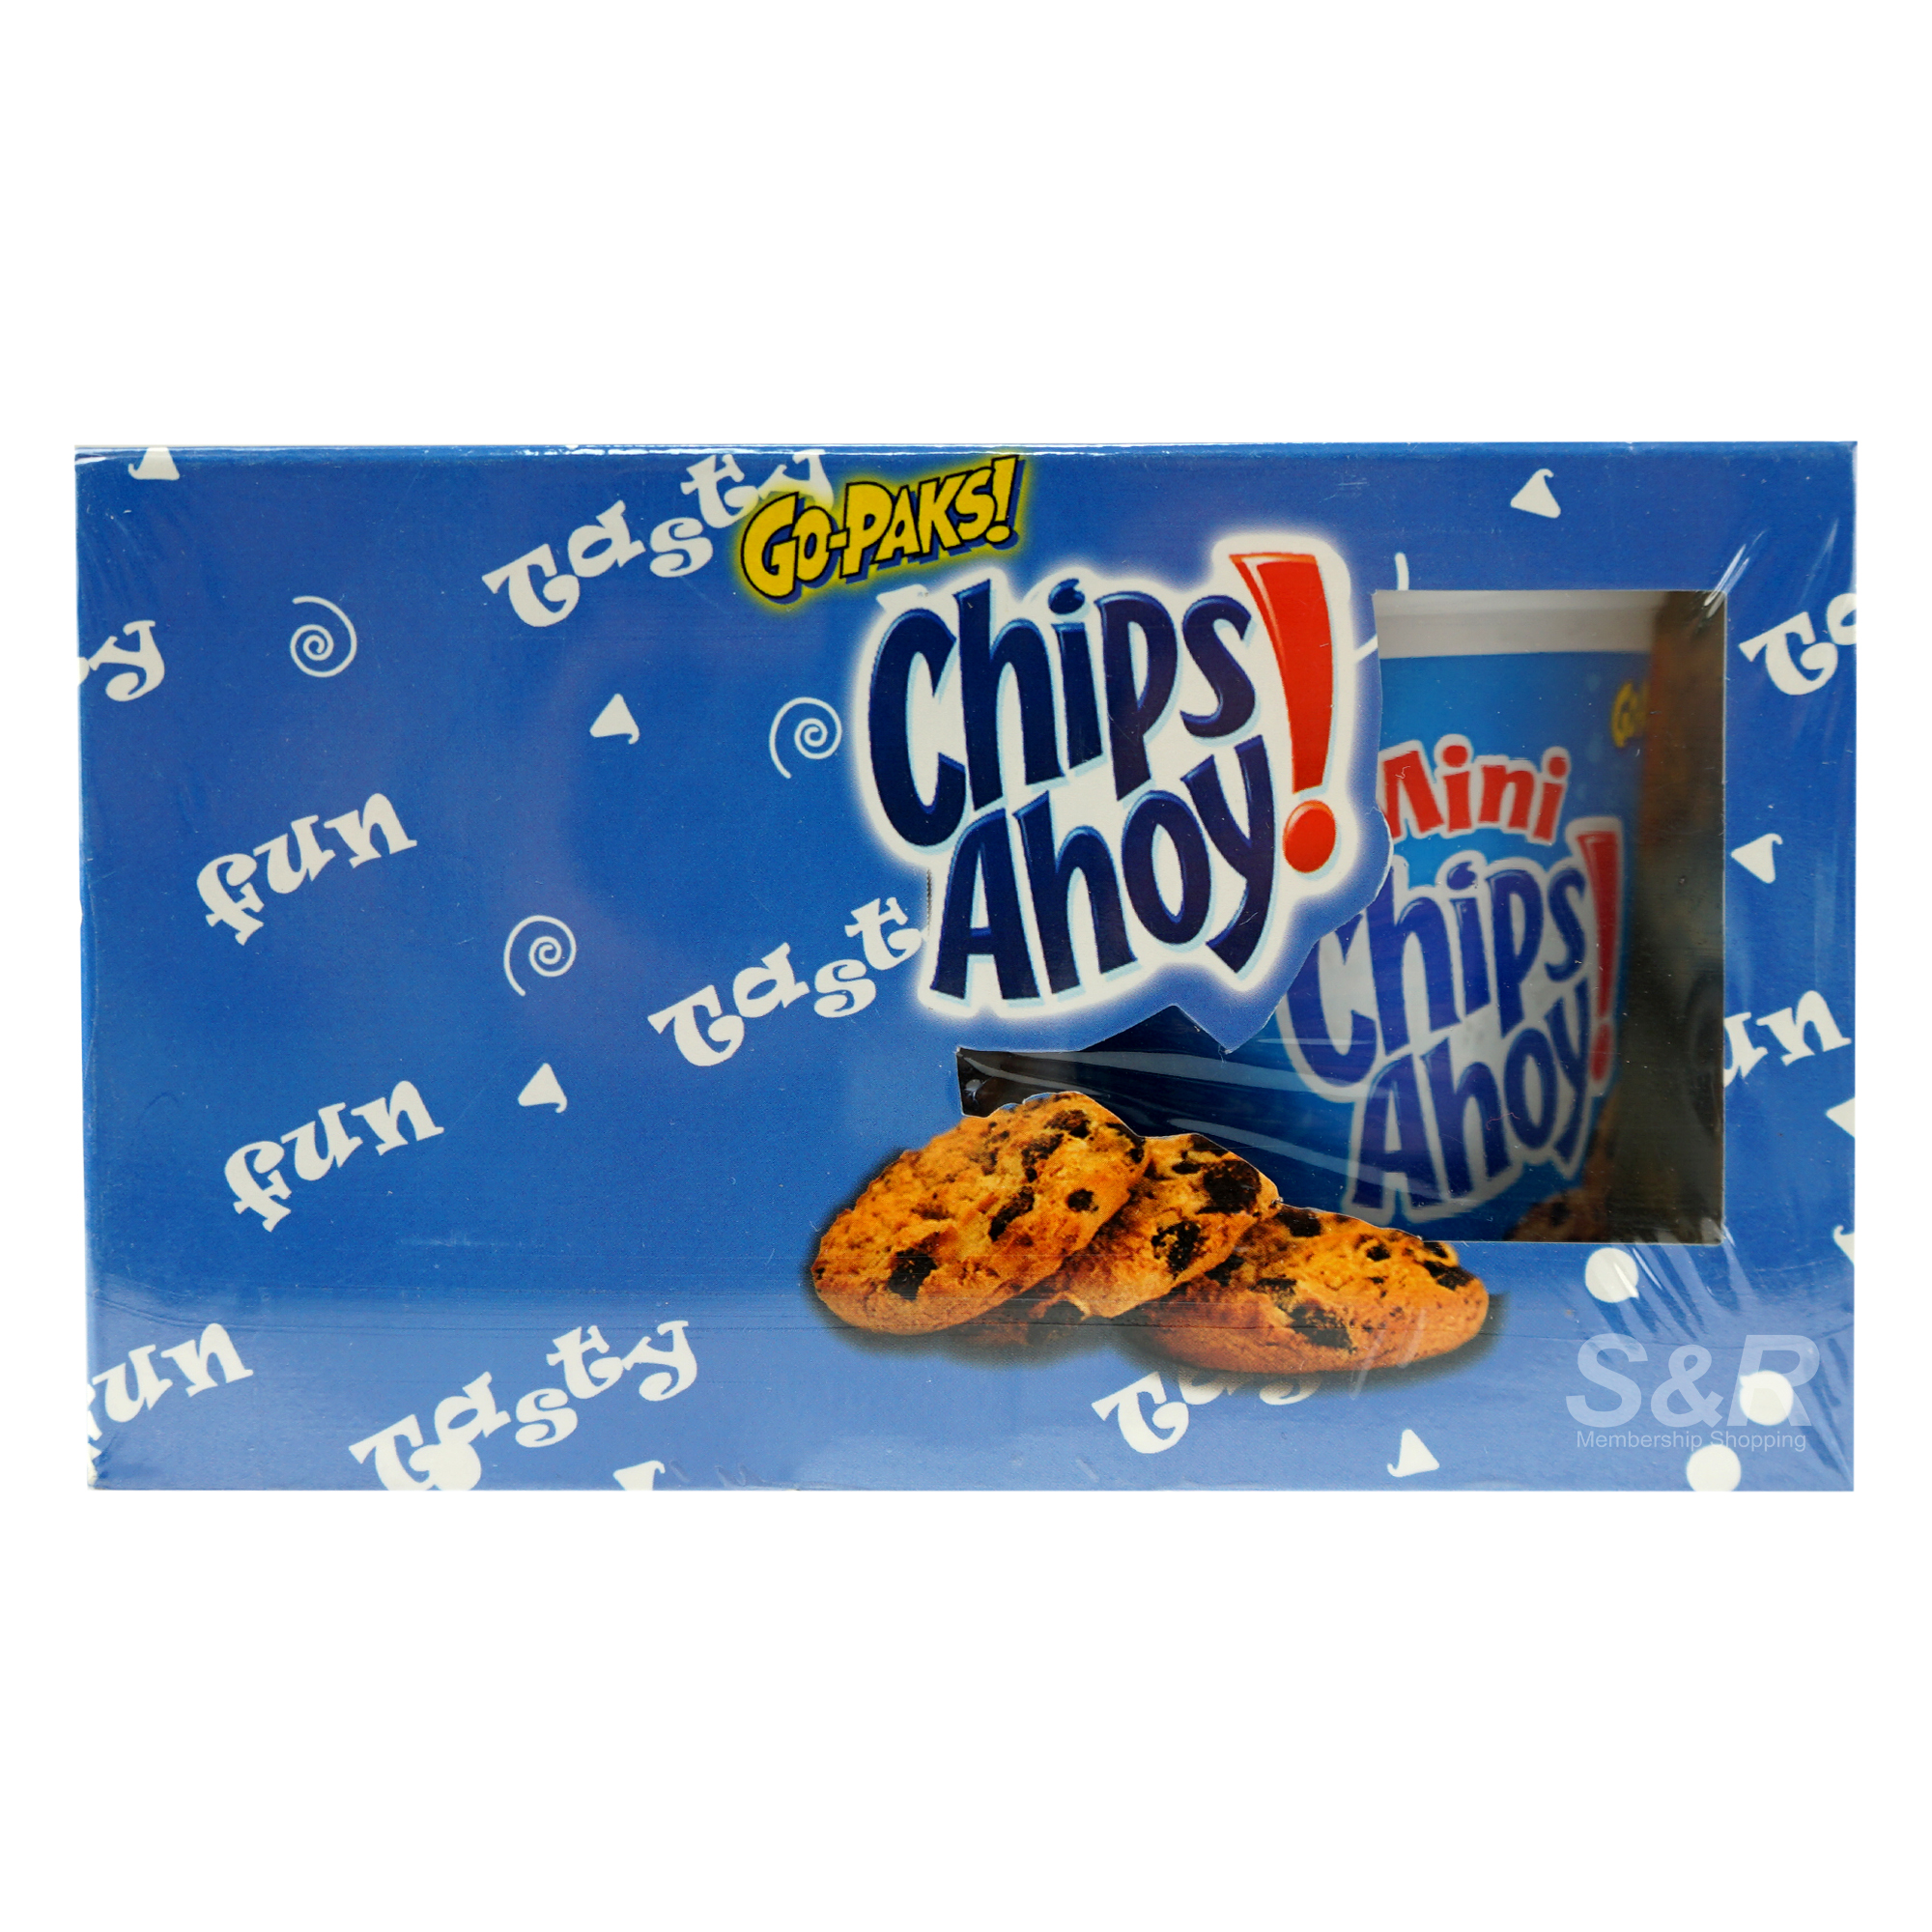 Mini Chips Ahoy! Go-Paks! Chocolate Chip Cookies 2pcs